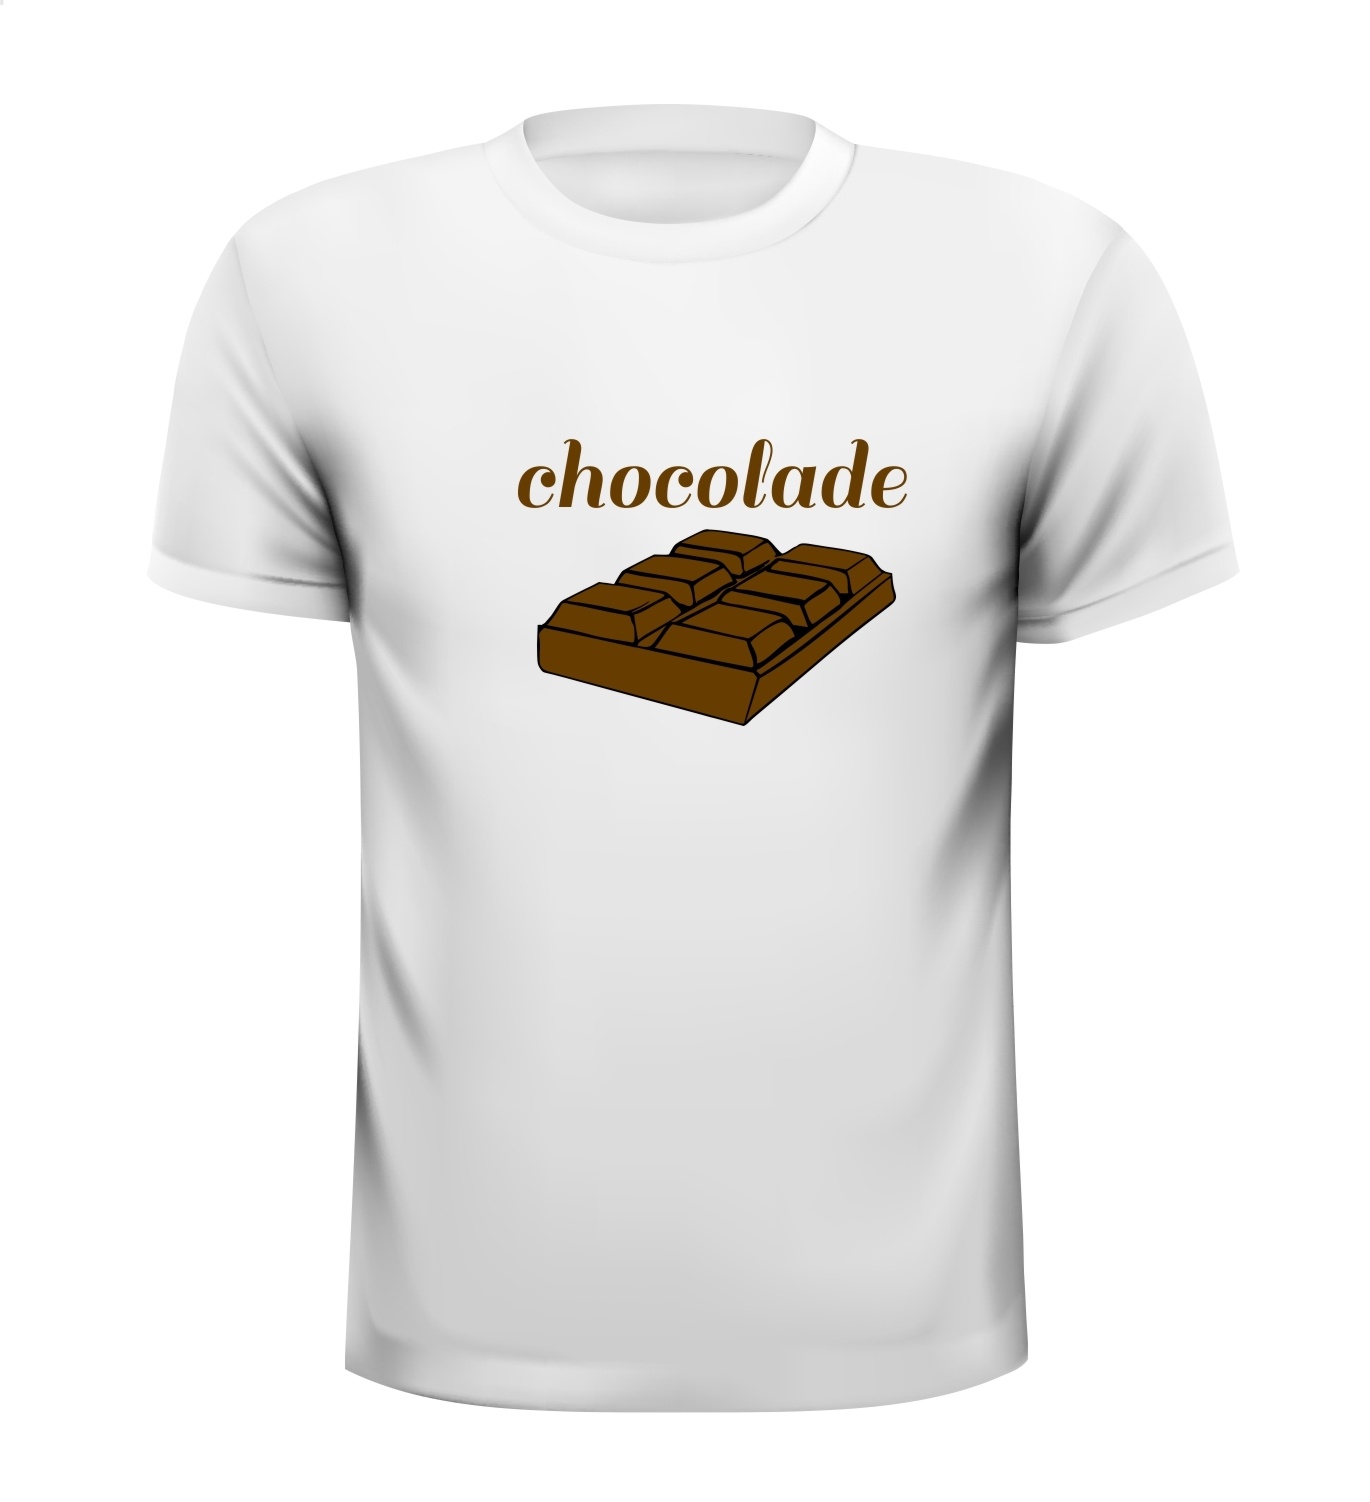 chocolade shirt